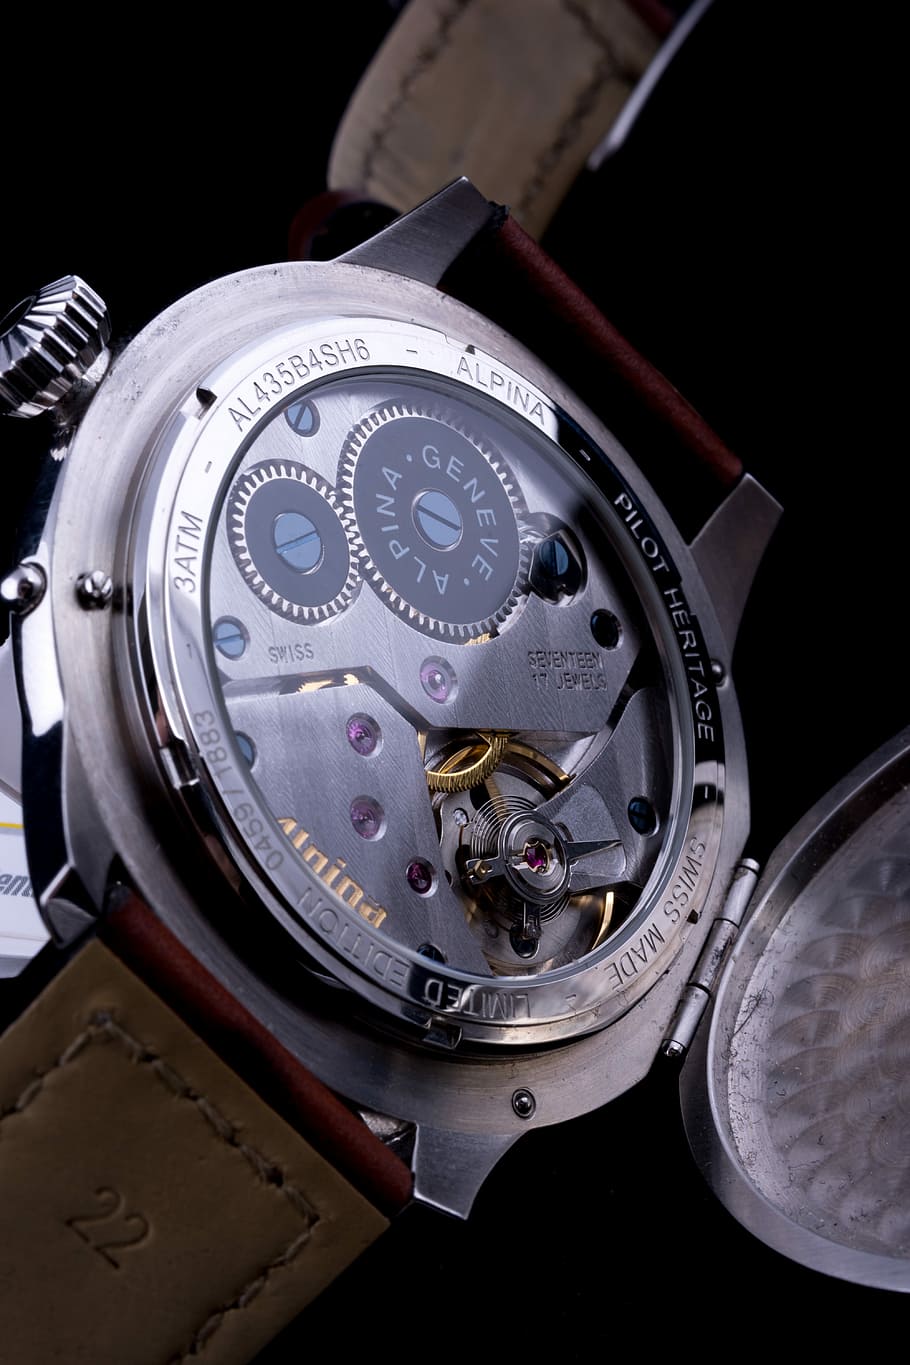 Watch, Jewel, Dial, Time, Minute, silver, clockwork, wrist watch, belt, leather strap